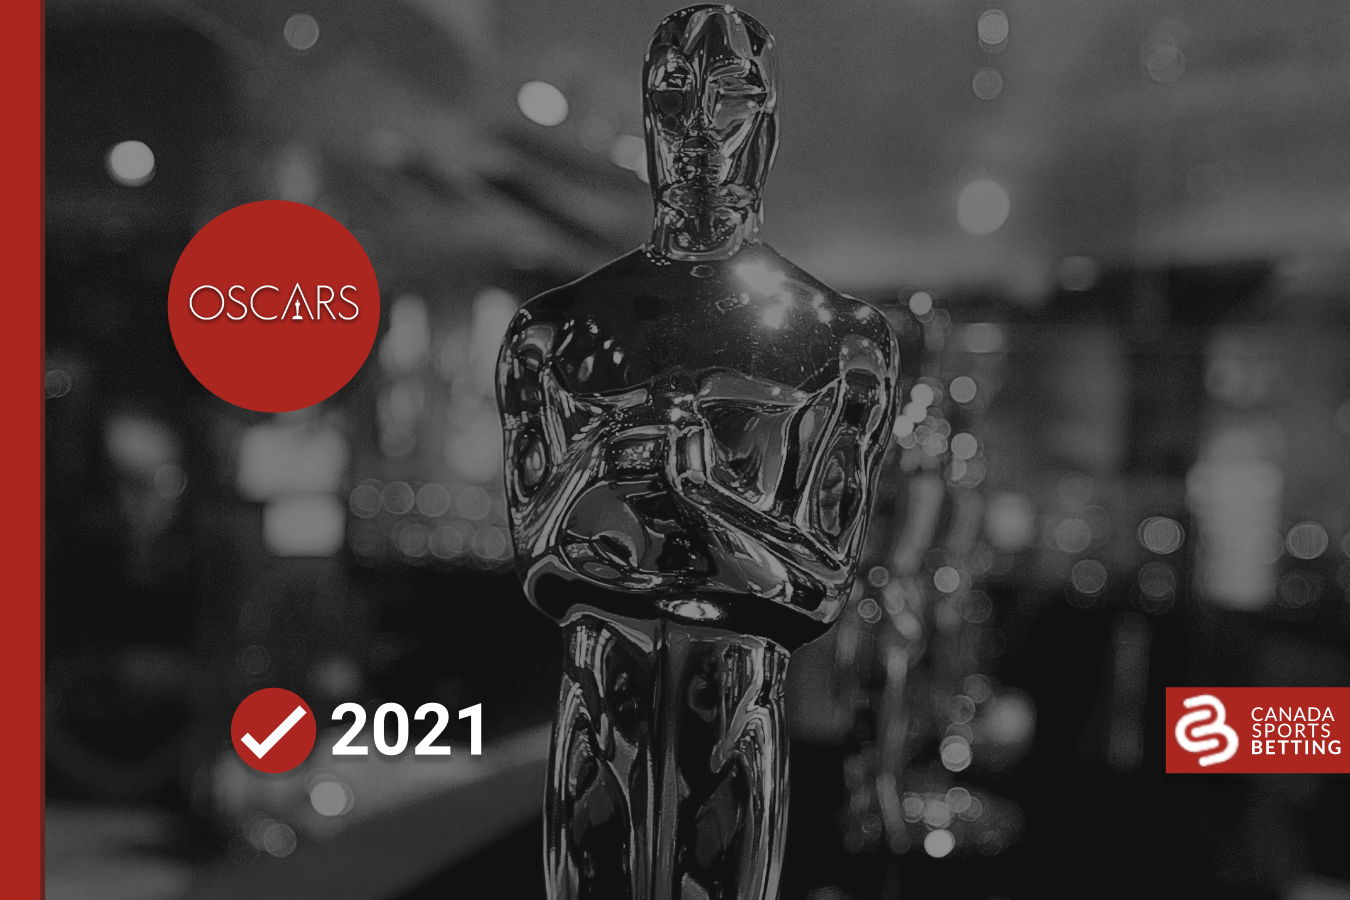 The Oscars 2021 Betting Picks